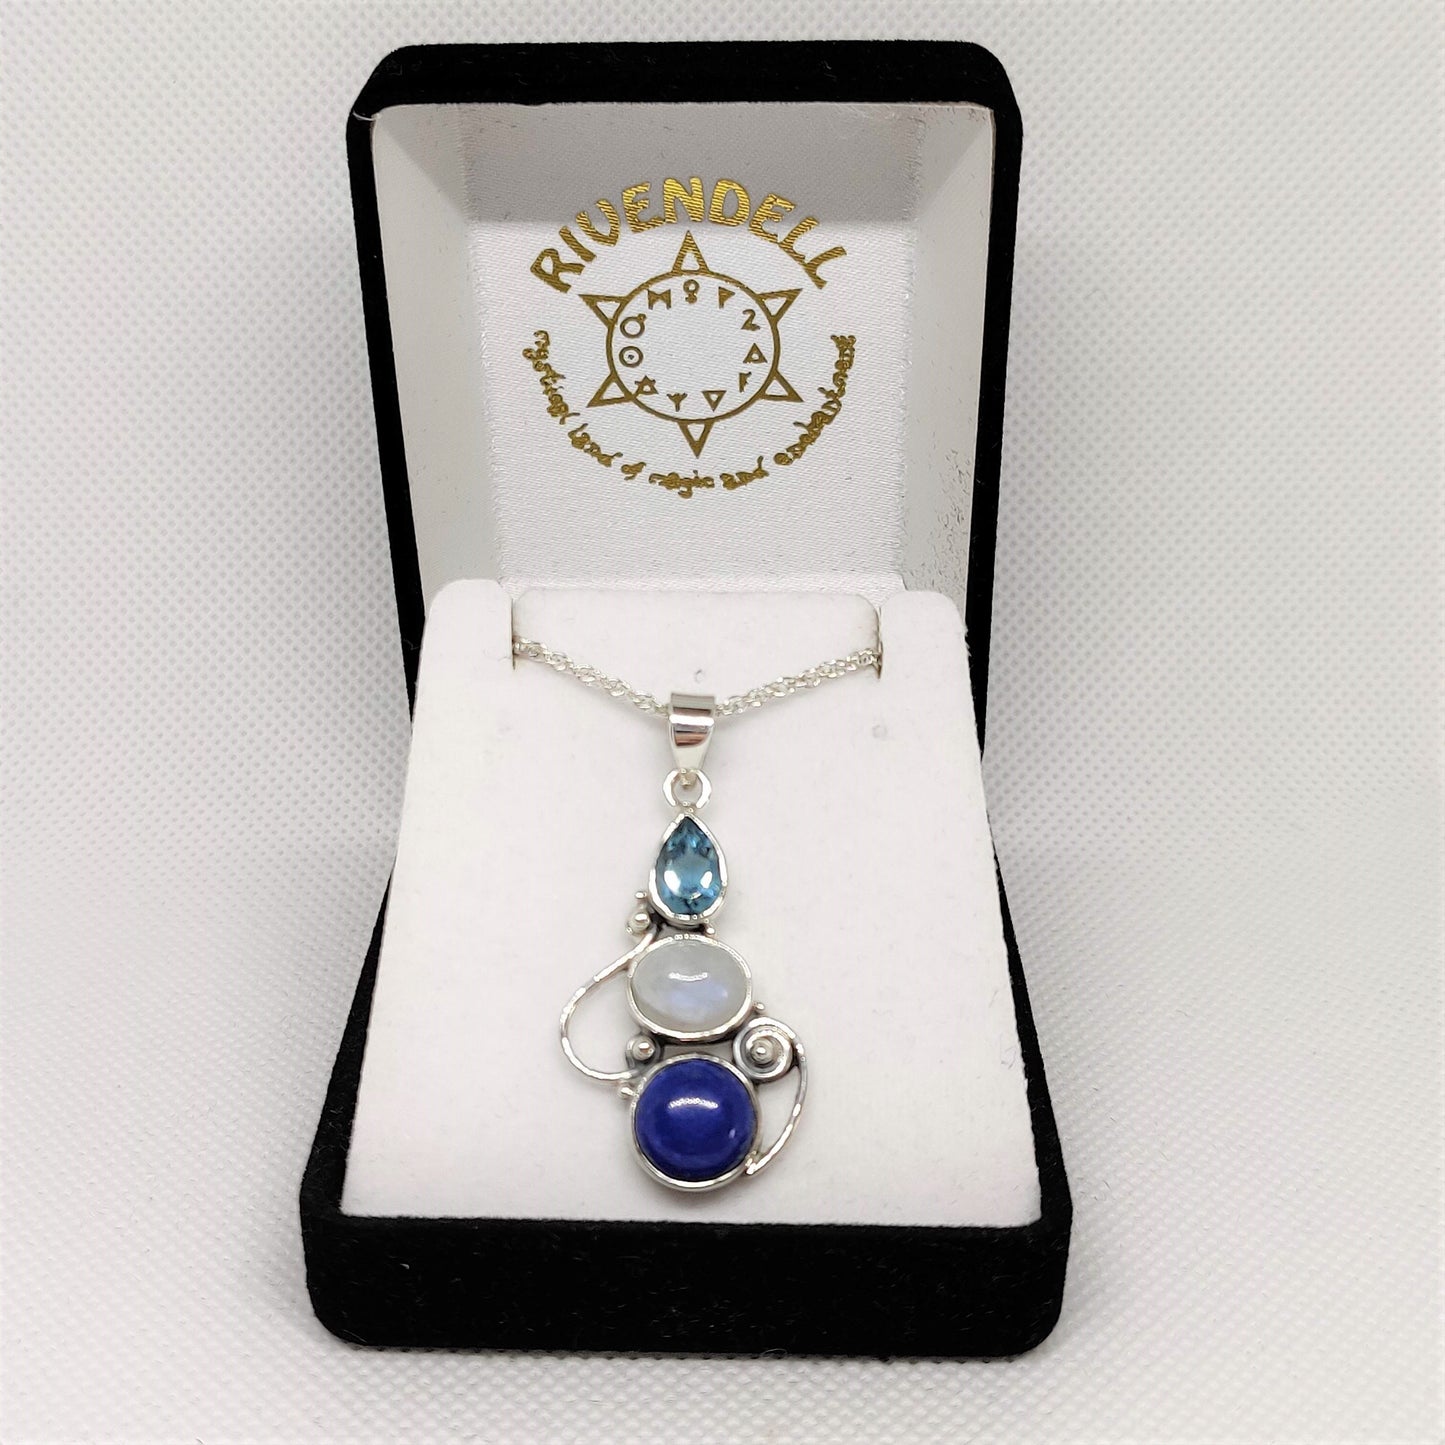 Blue Topaz, Moonstone and Lapis Lazuli 925 Sterling Silver Pendant - Rivendell Shop